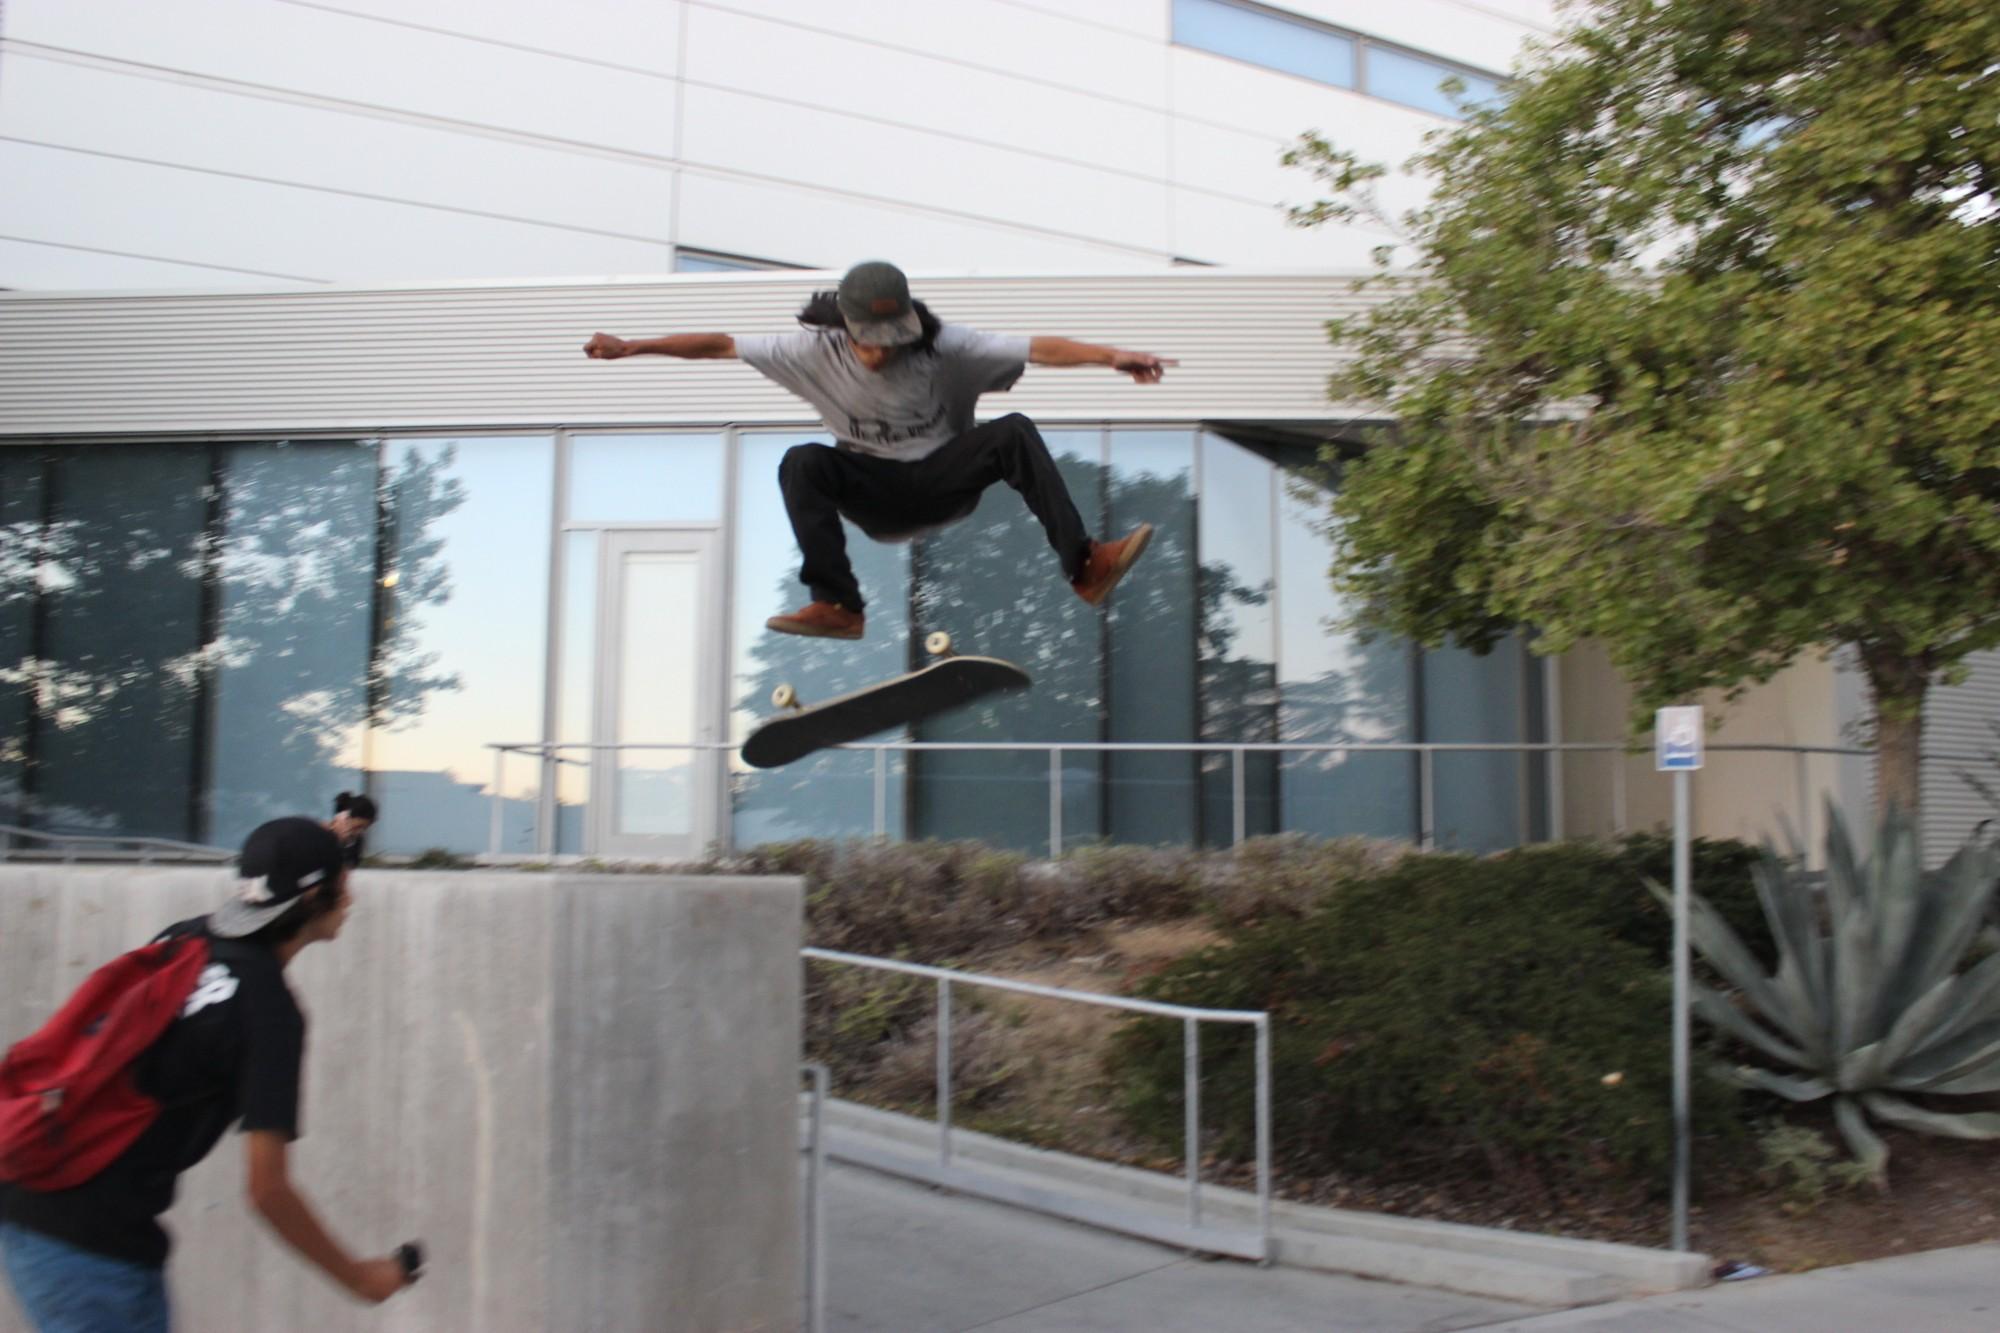 skateboarder attempts kickflip